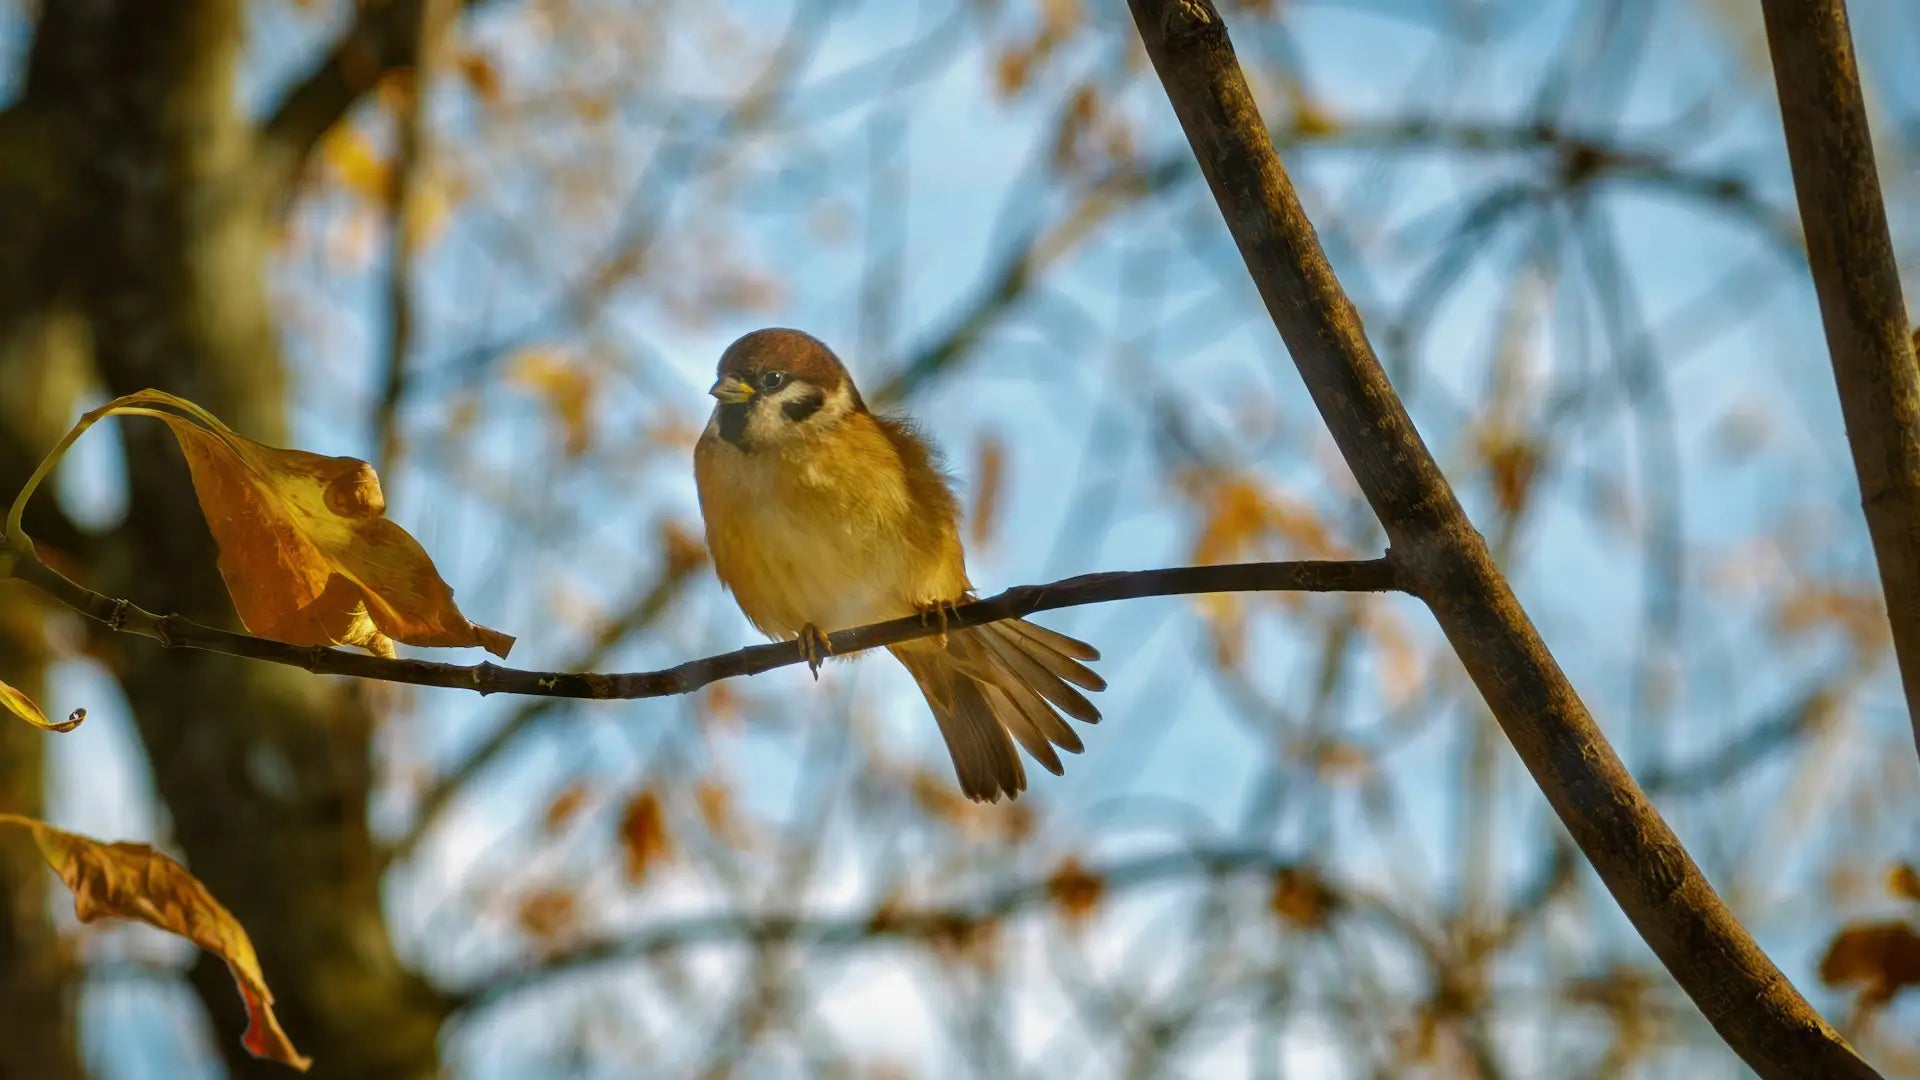 Bilantan Bird Identification Guide: New Era in Birdwatching